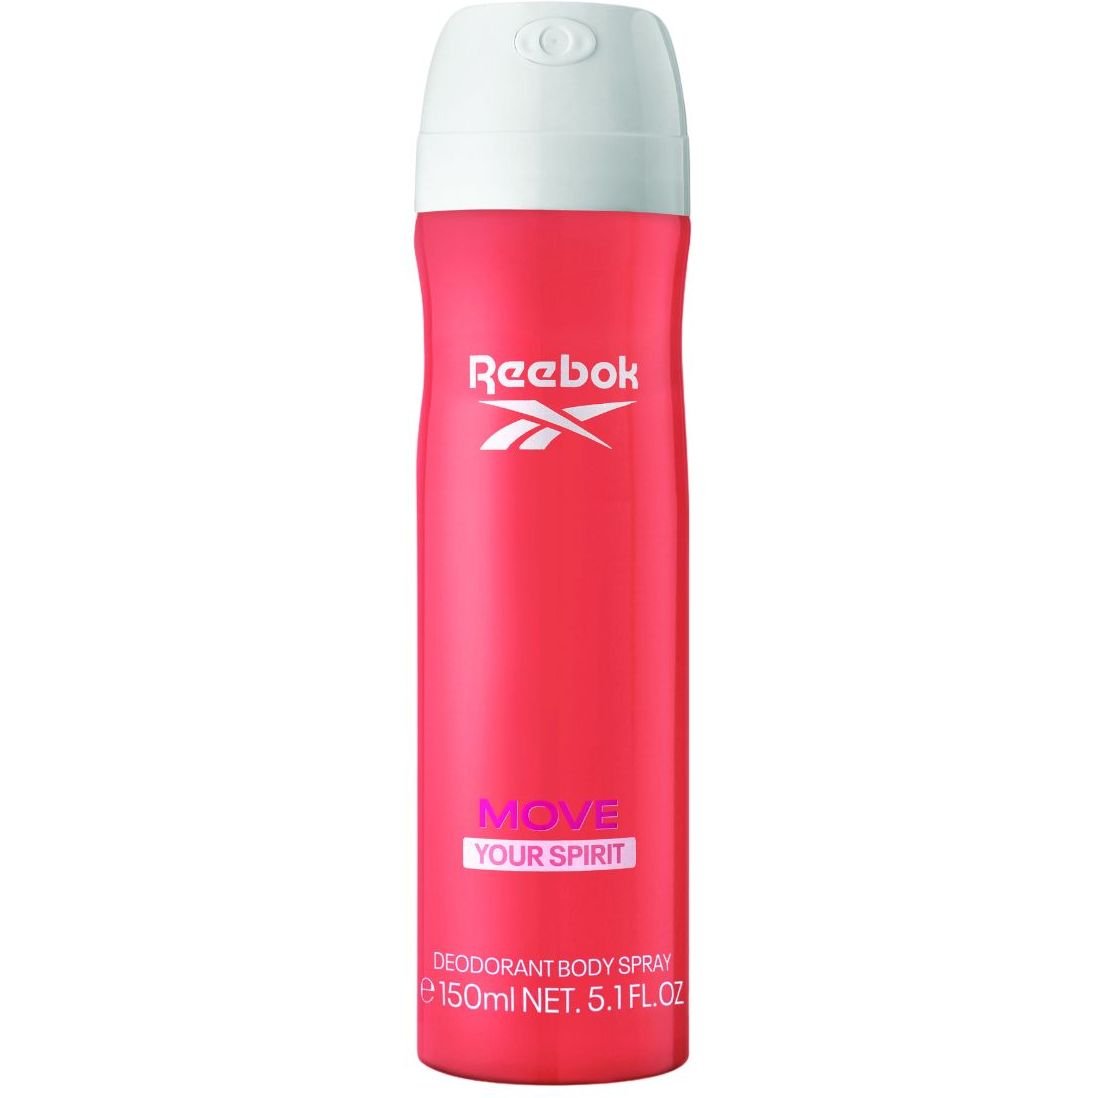 Дезодорант-спрей для женщин Reebok Move your spirit, 150 мл - фото 1